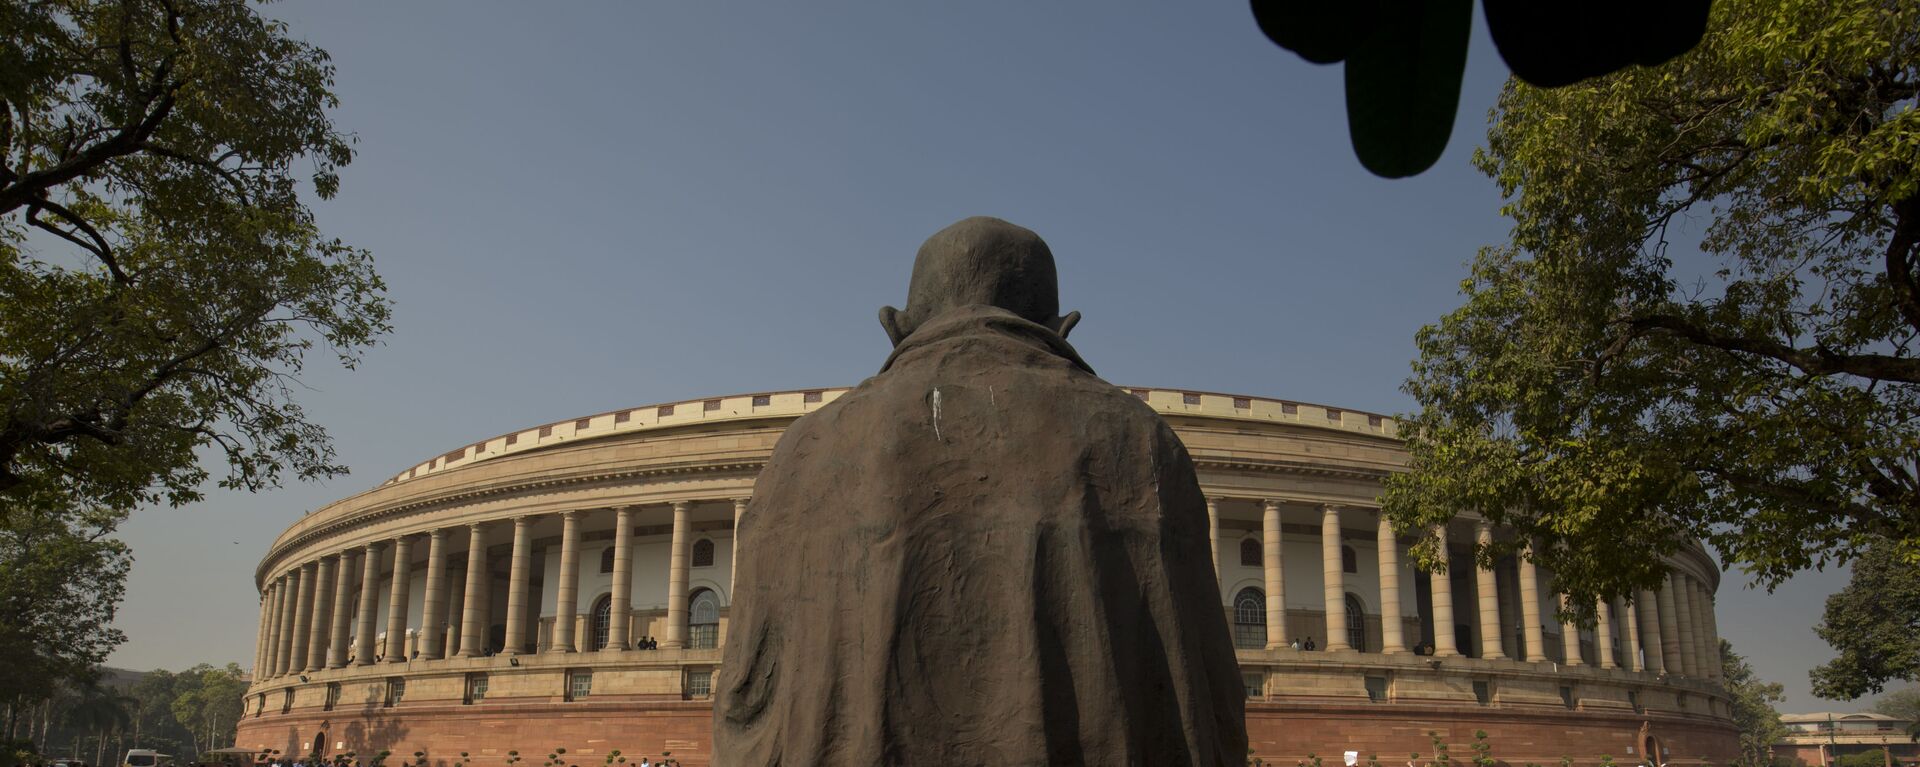 A statue of Mahatma Gandhi overlooks the Indian parliament building (File). - Sputnik International, 1920, 11.01.2021